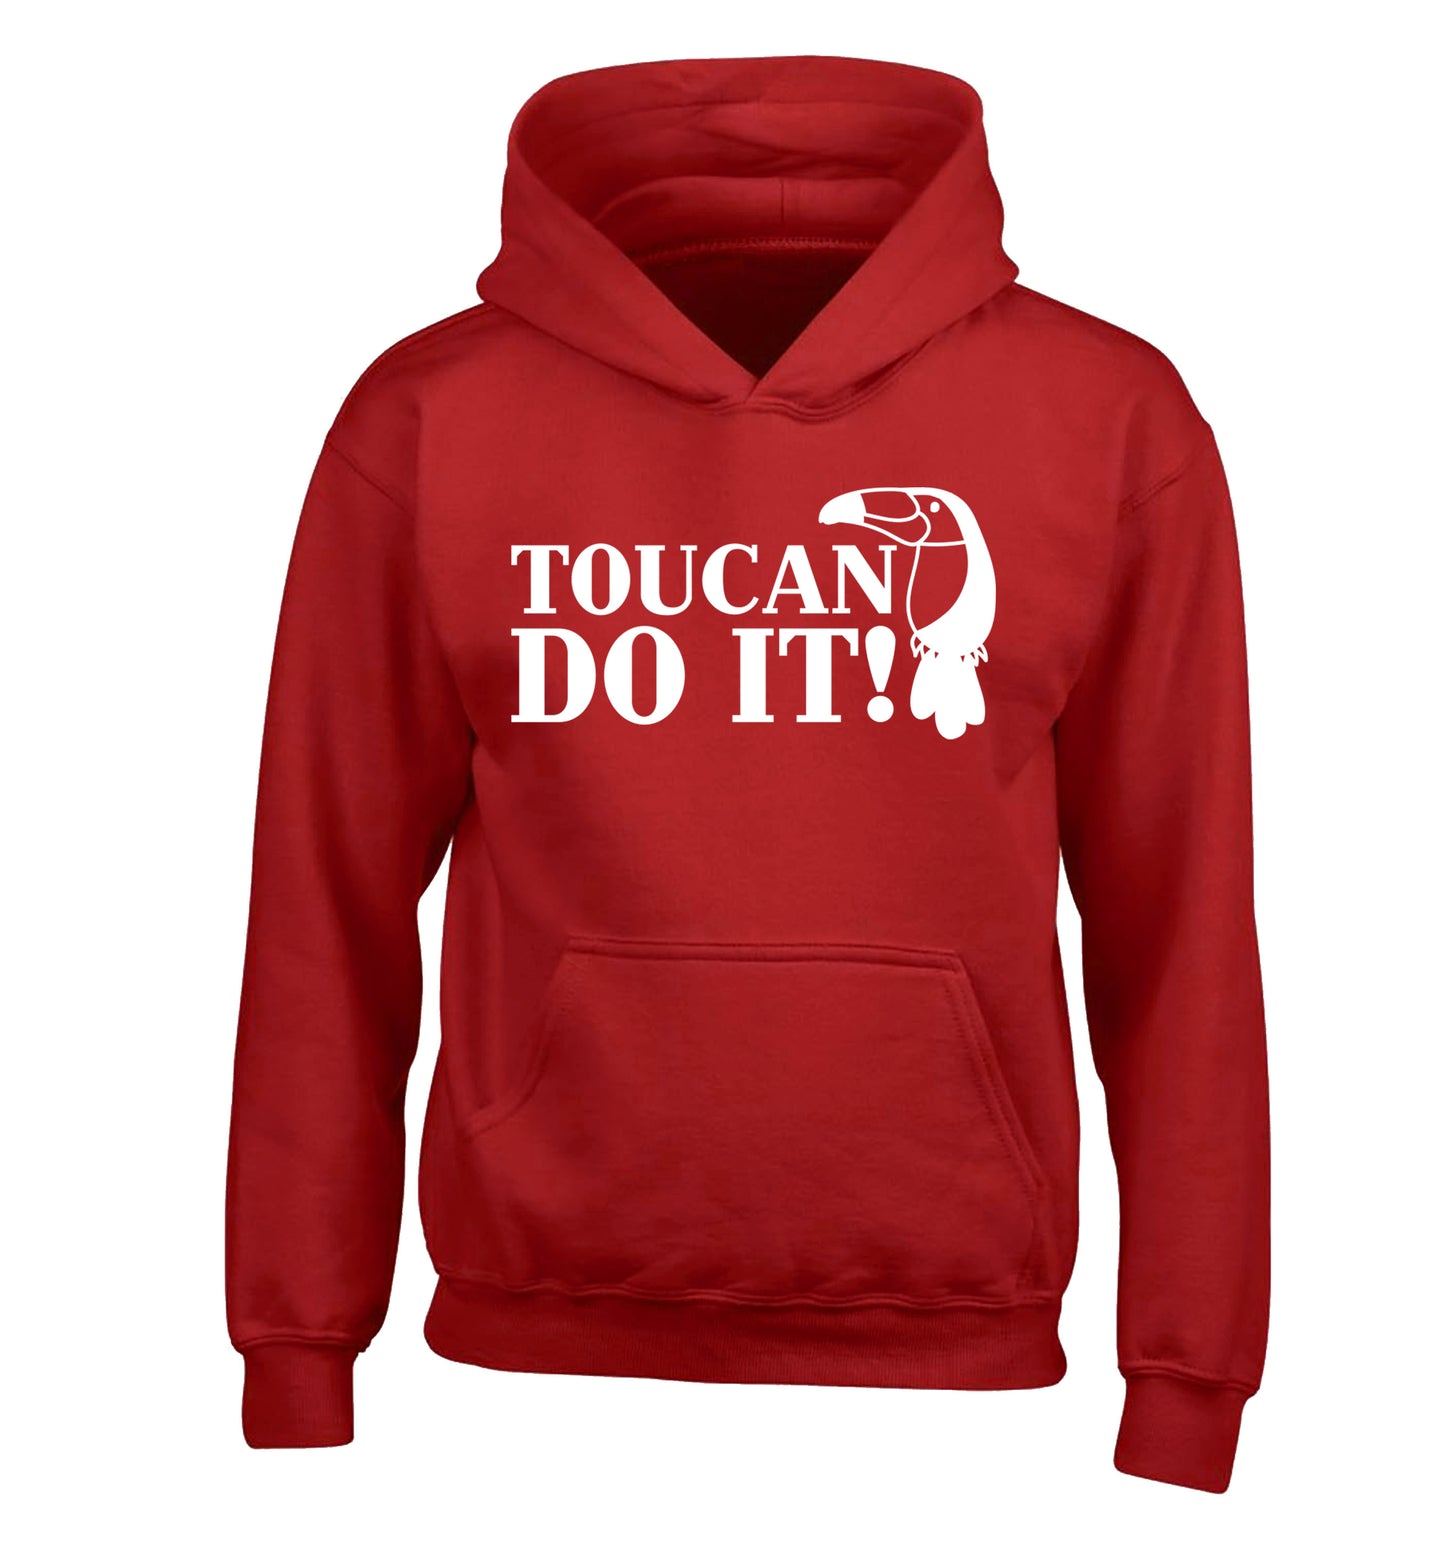 Toucan do it! children's red hoodie 12-13 Years